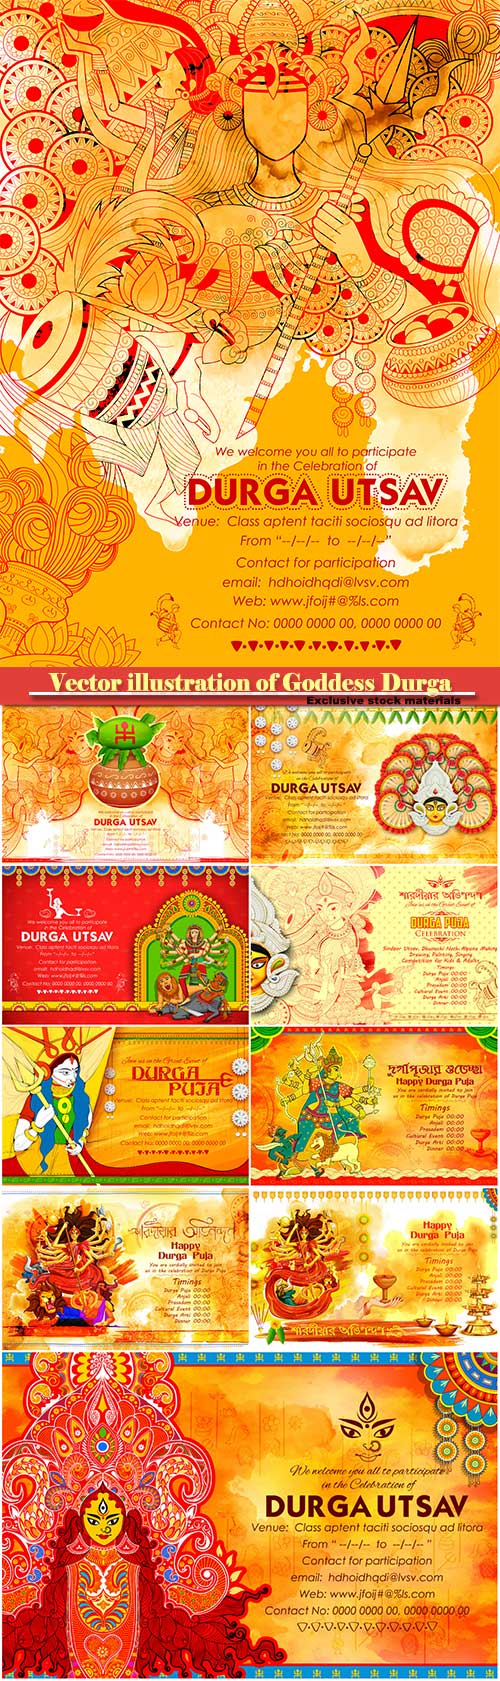 Vector illustration of Goddess Durga in Subho Bijoya Happy Dussehra background